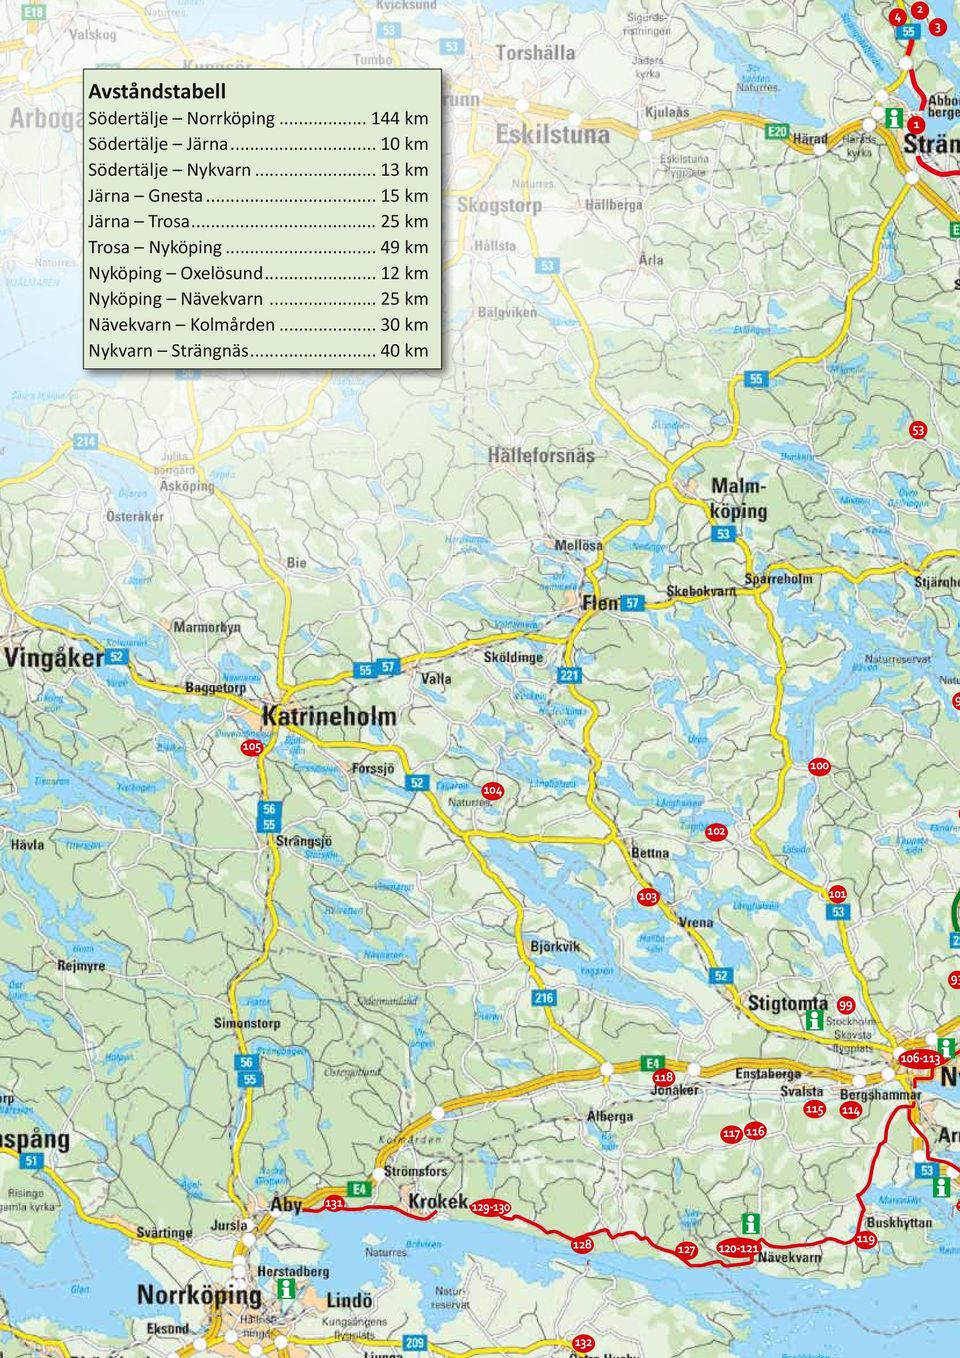 .. 49 km Nyköping Oxelösund... 12 km Nyköping Nävekvarn... 25 km Nävekvarn Kolmården.